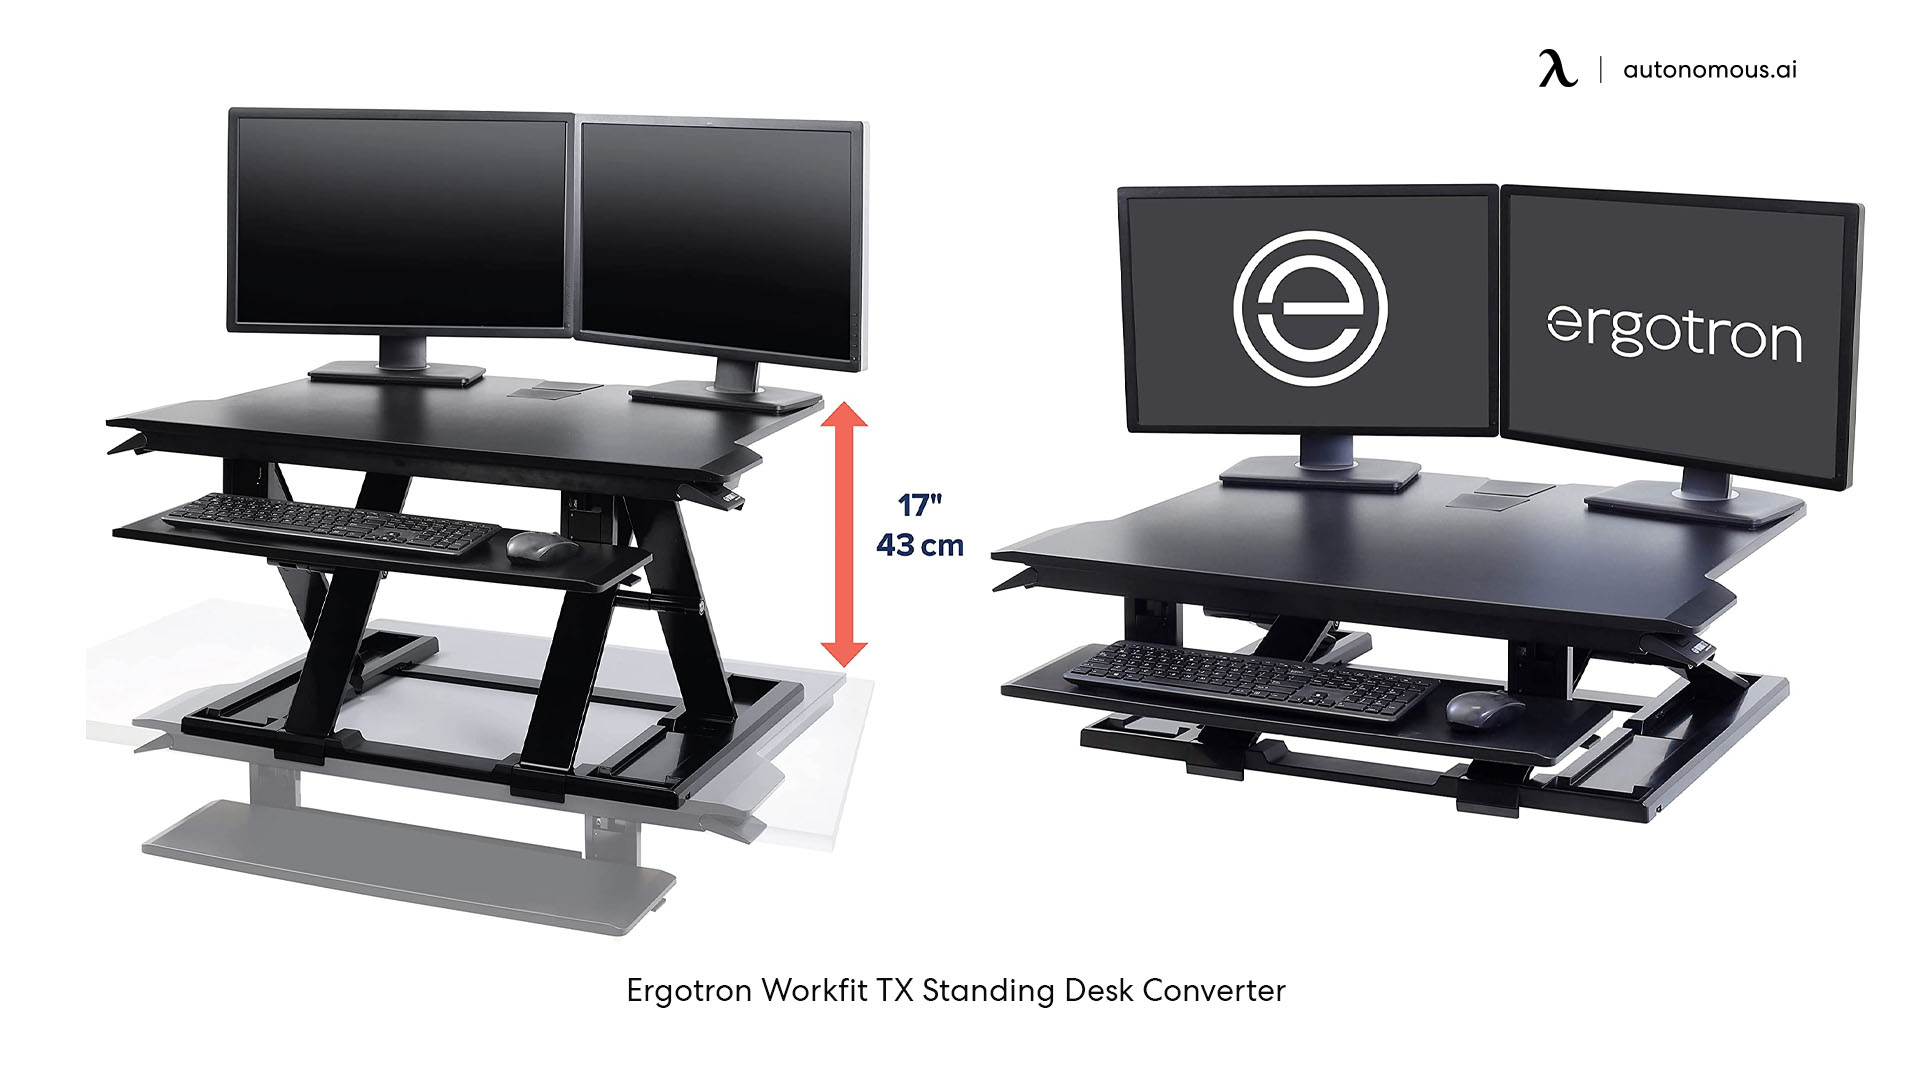 Ergotron WorkFit-T black desk converter